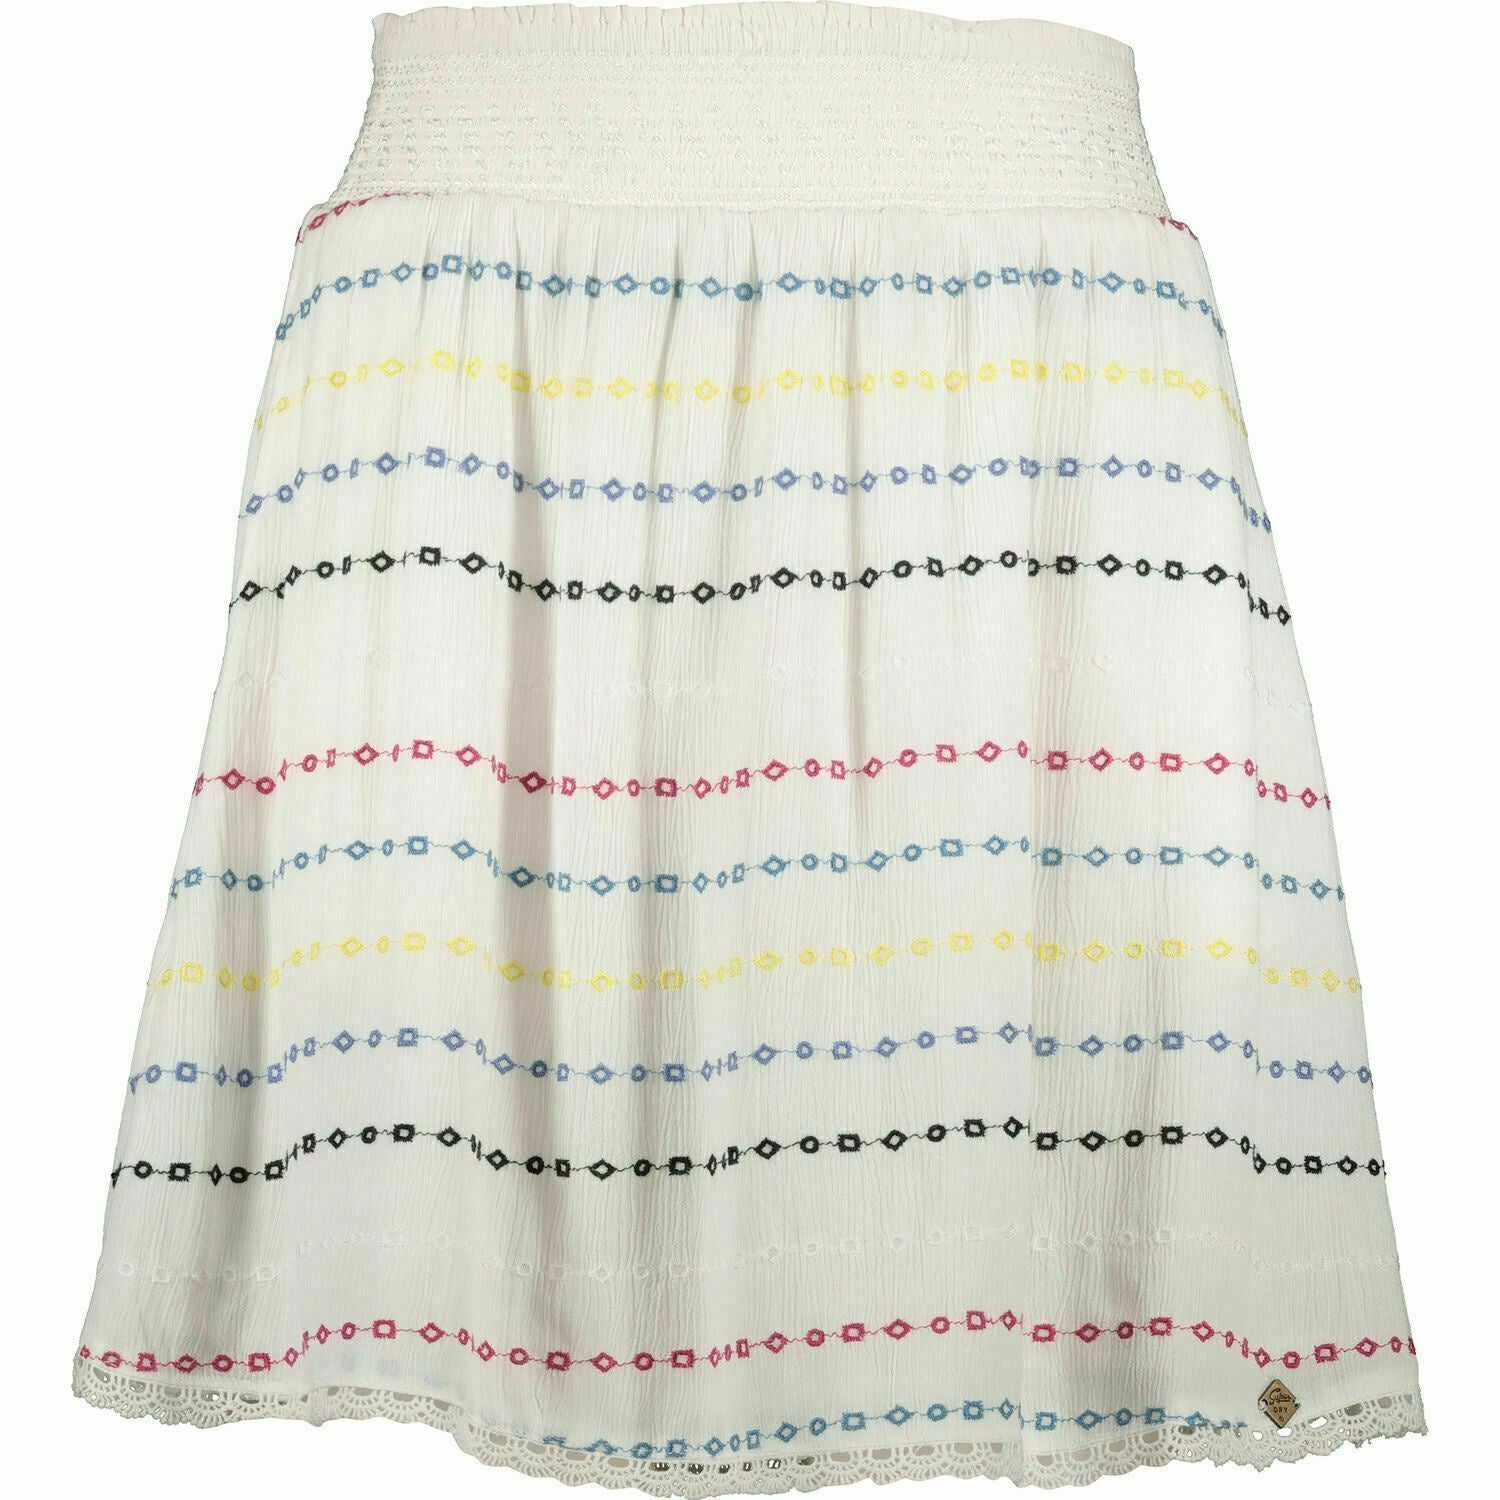 SUPERDRY Women's SARA Smocking Skirt, White/Geo, size XS / UK 8